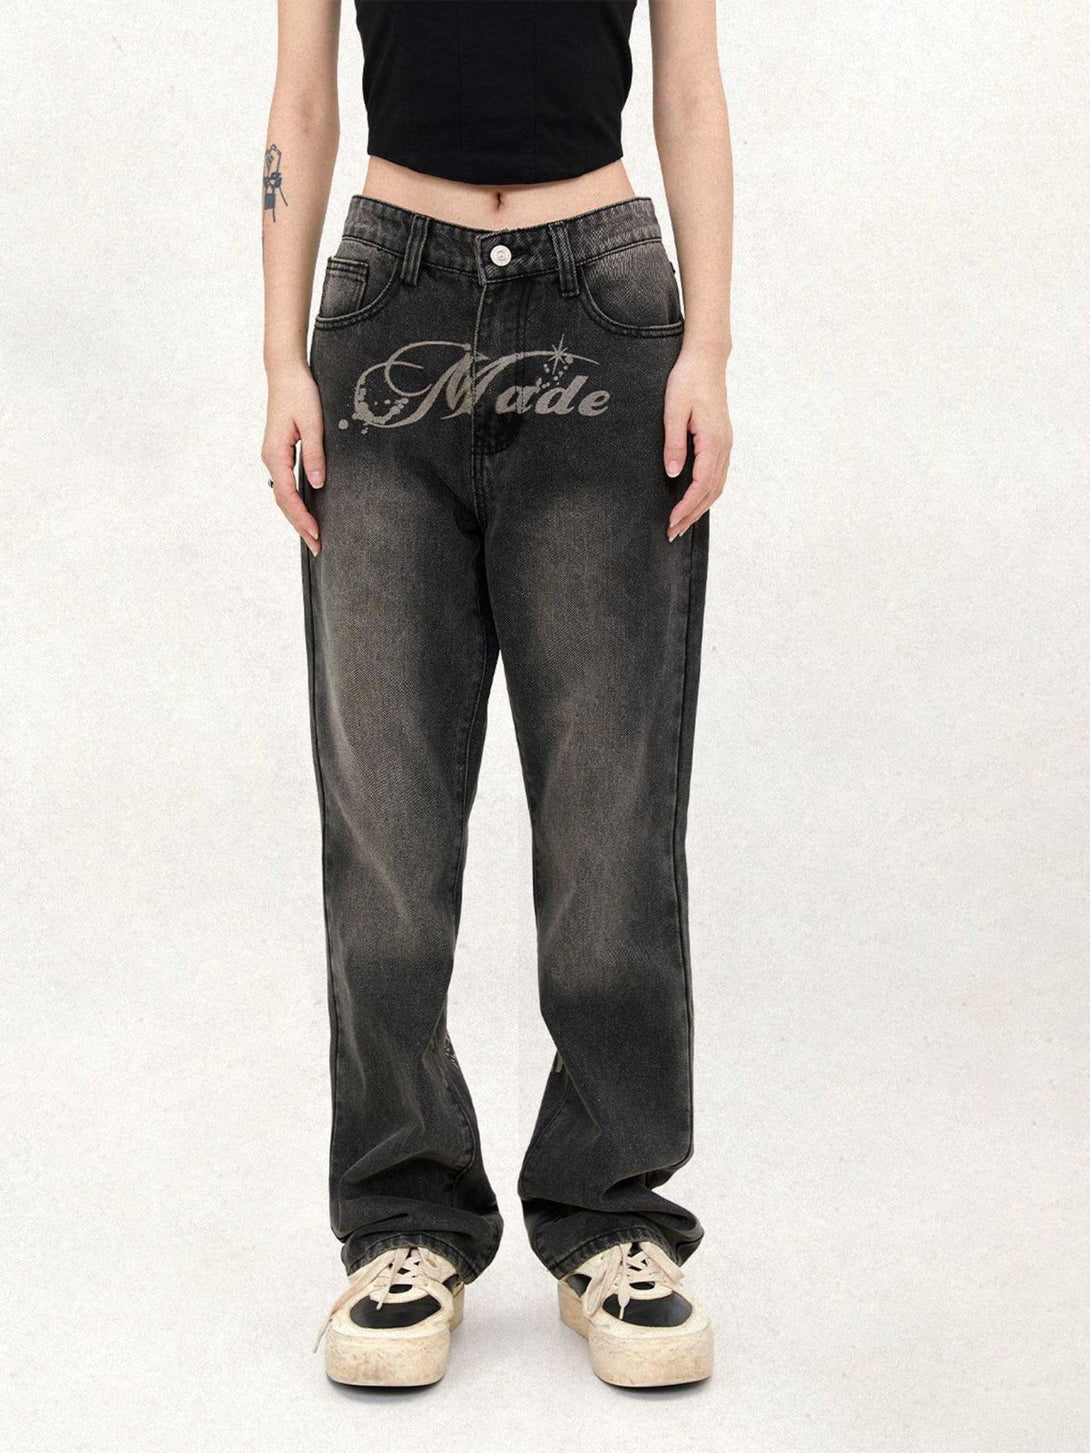 Majesda® - American Street Style Straight Leg Jeans- Outfit Ideas - Streetwear Fashion - majesda.com